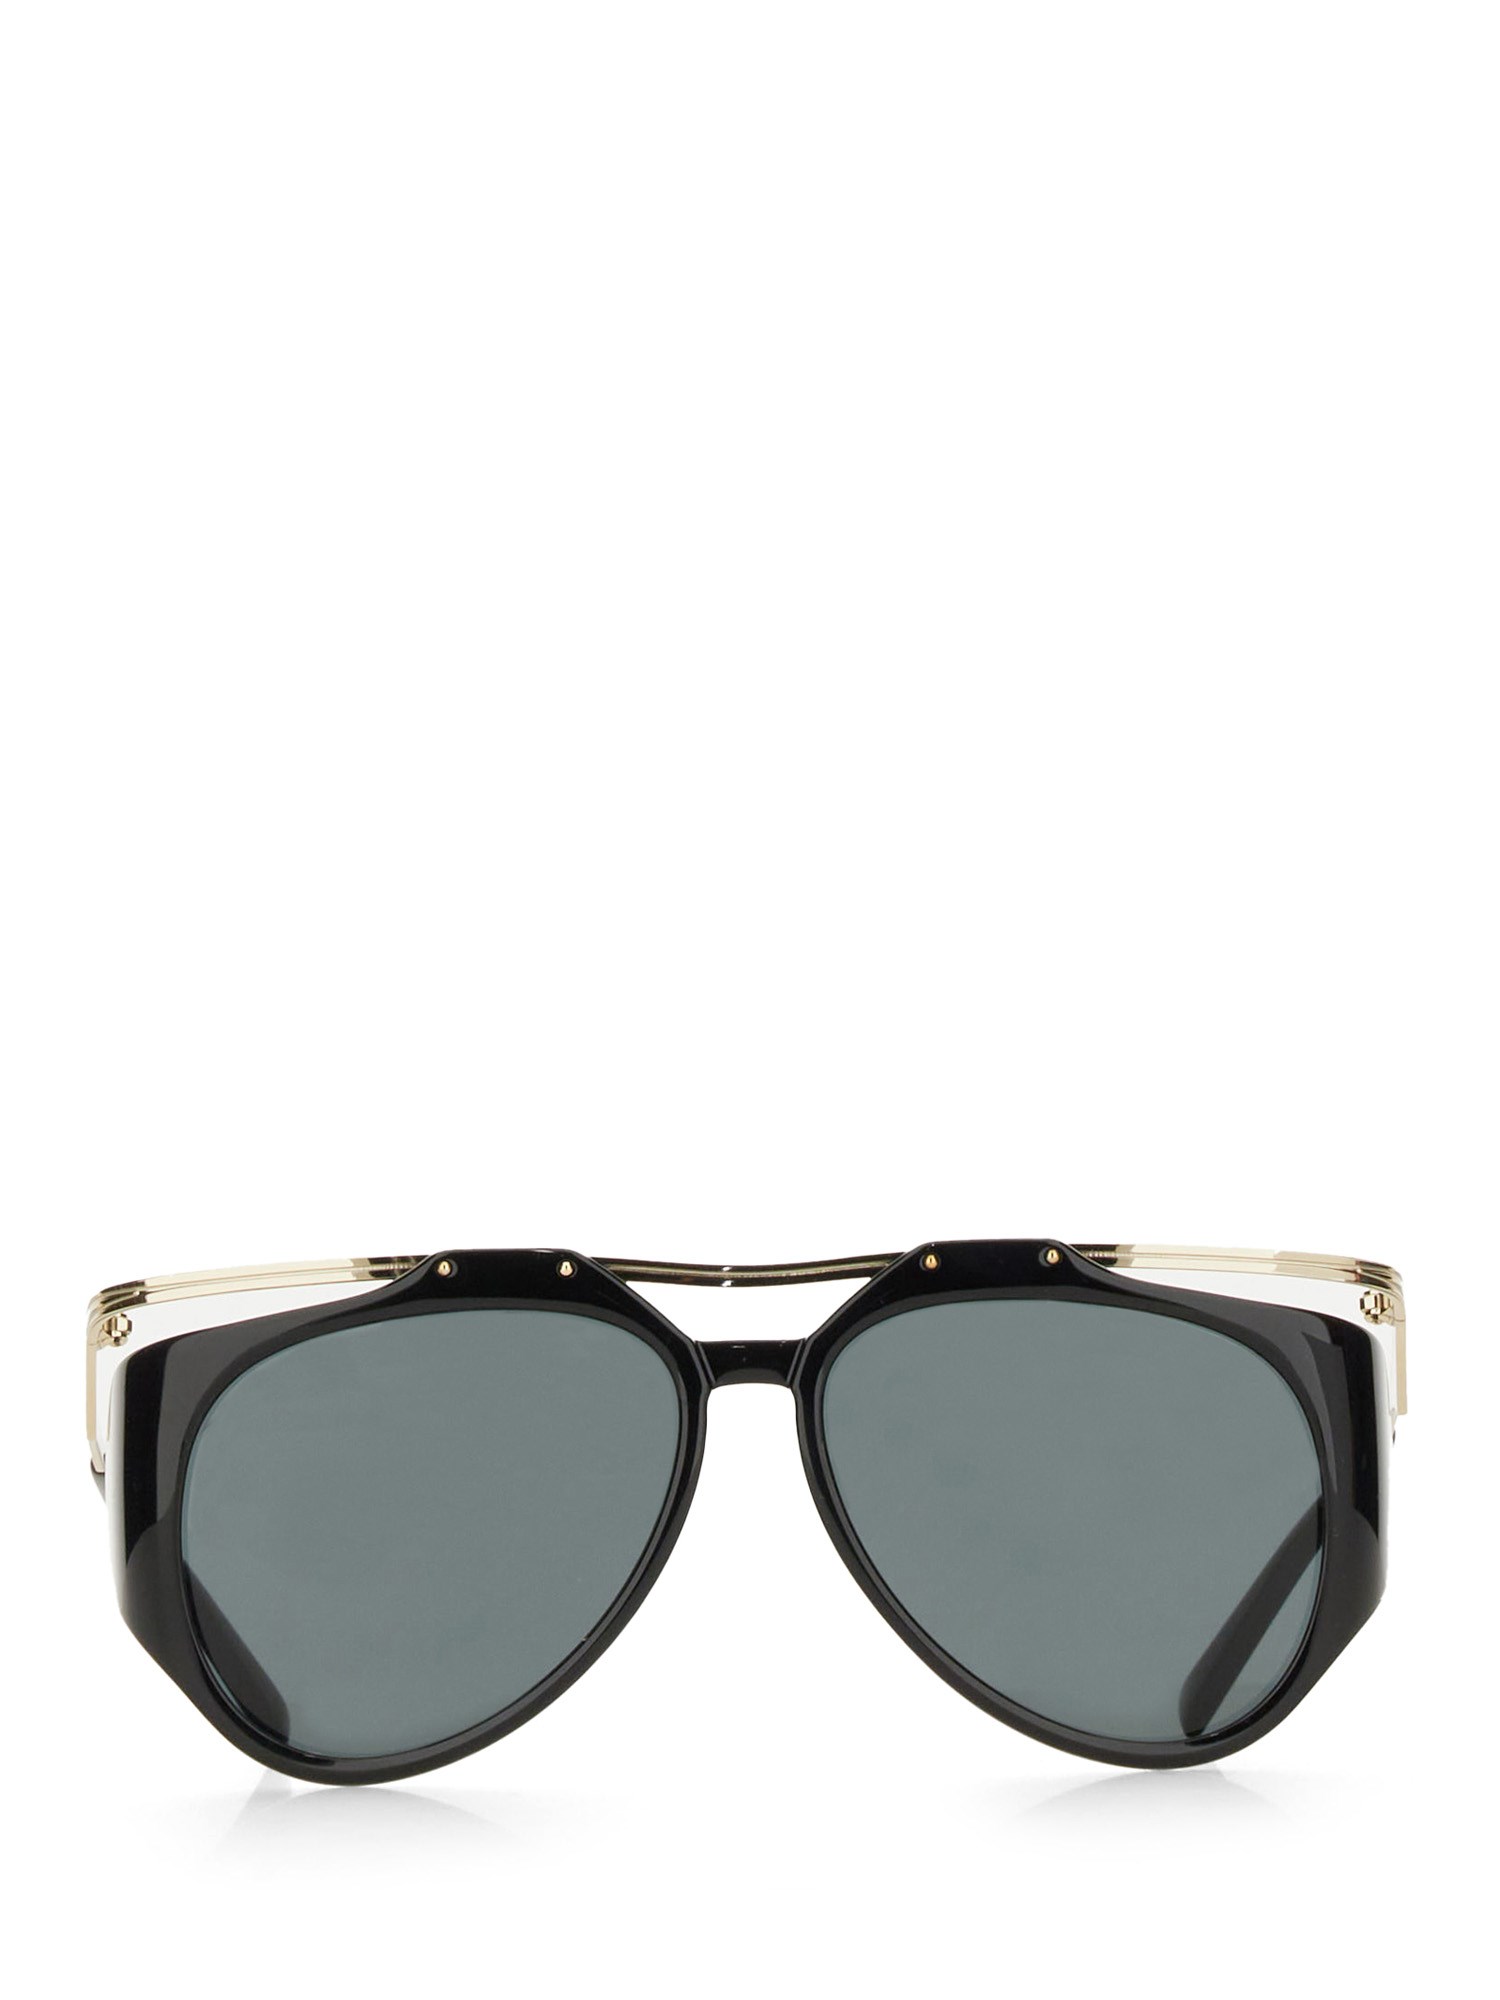 Saint Laurent saint laurent sunglasses sl m137 amelia